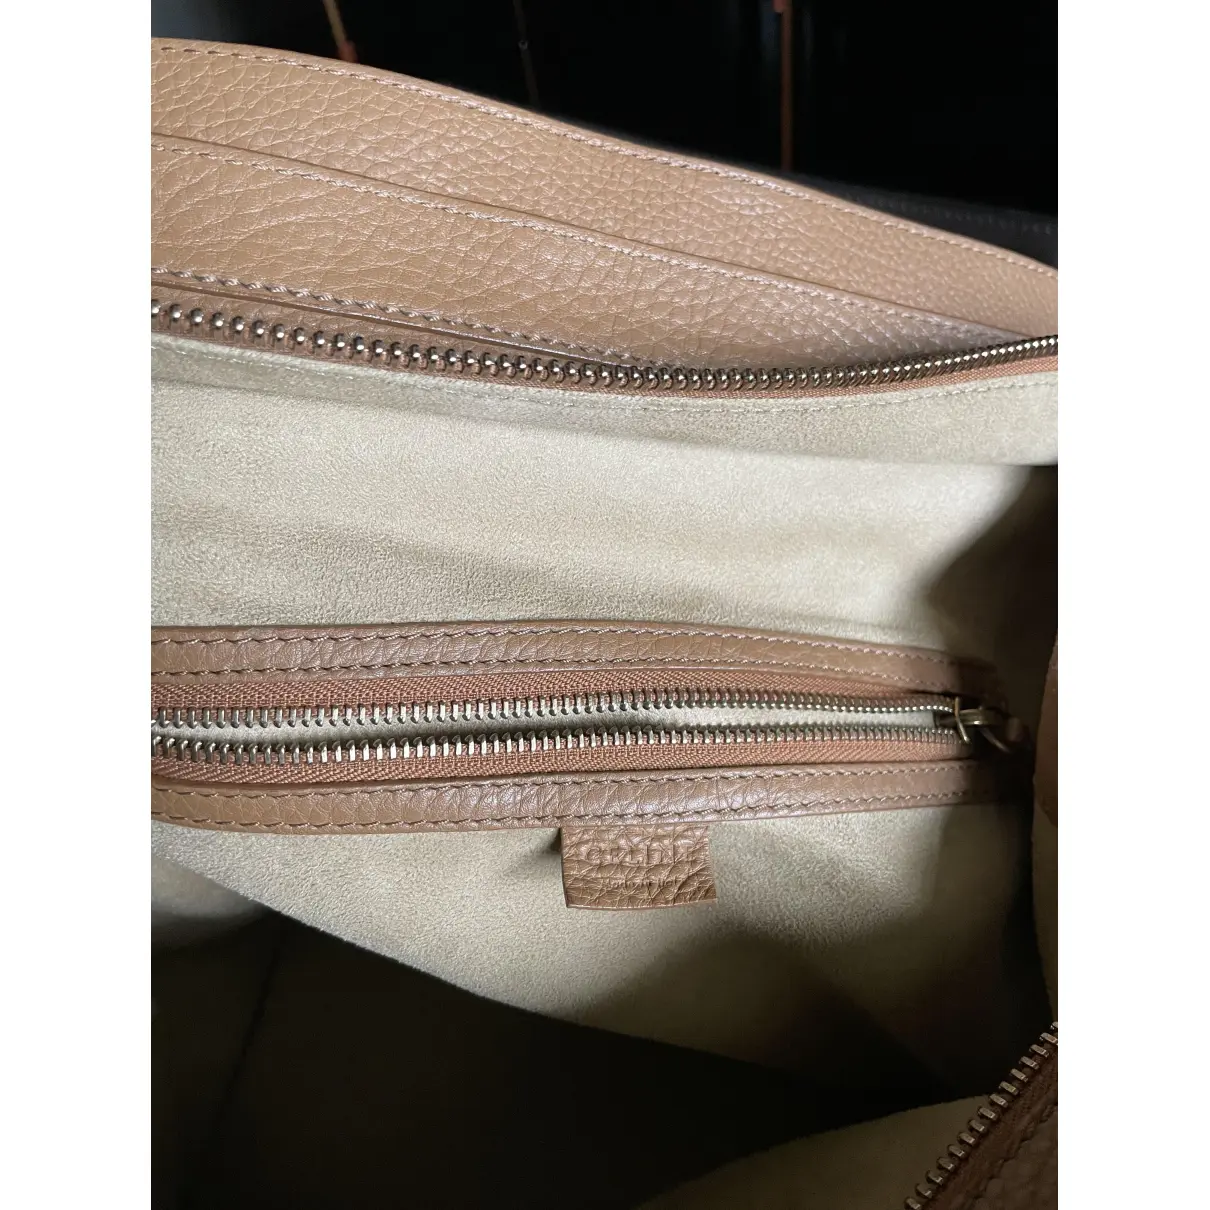 Nano Luggage leather handbag Celine